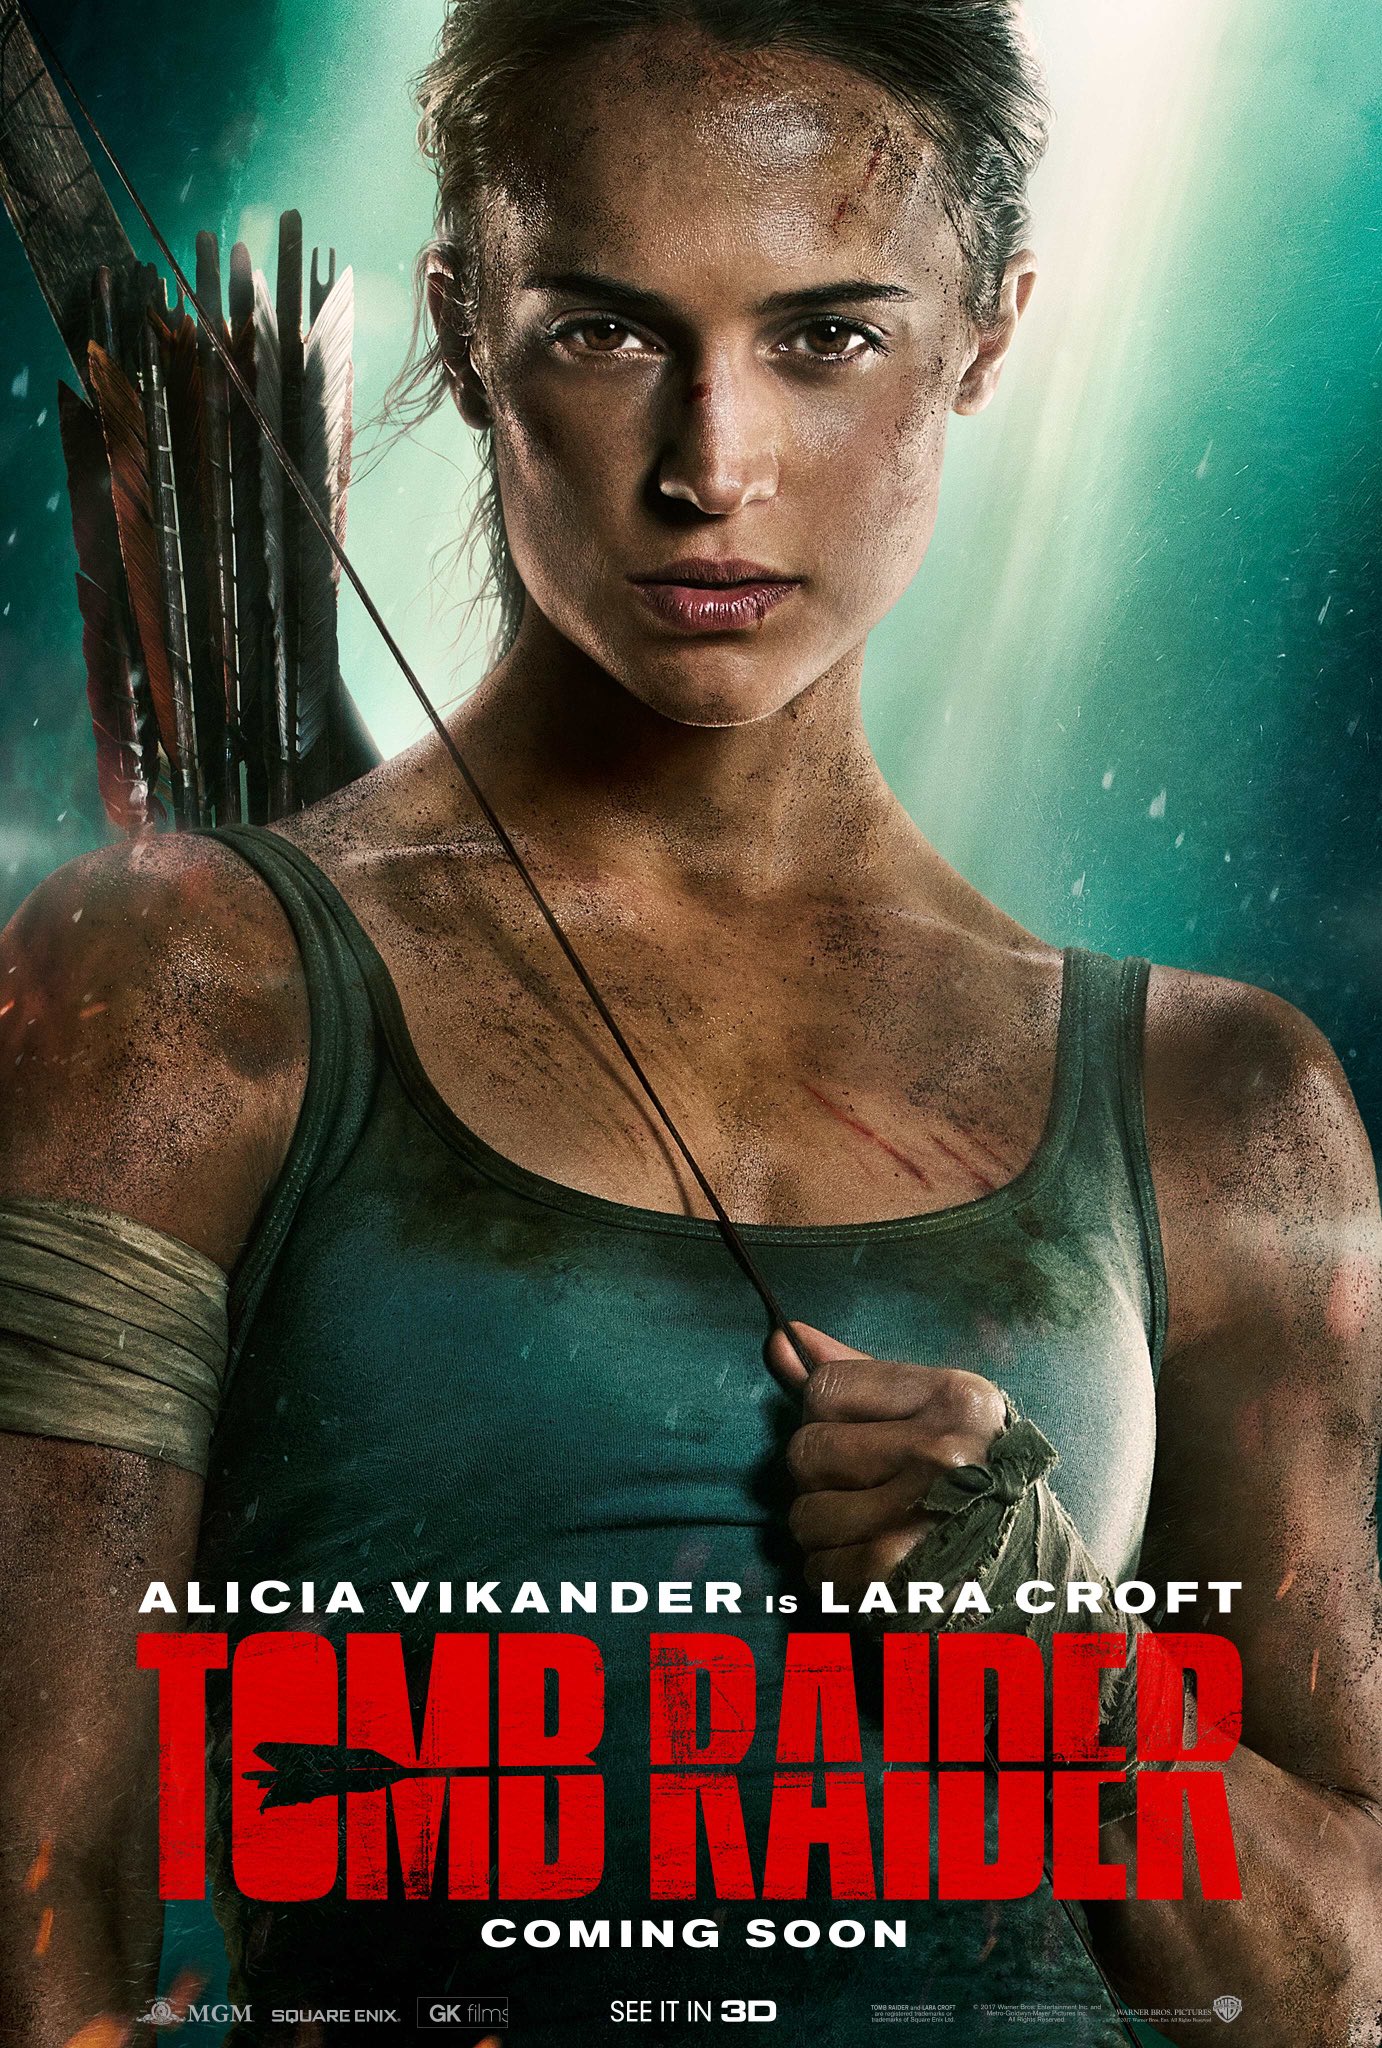 Второй трейлер «Tomb Raider: Лара Крофт» с Алисией Викандер